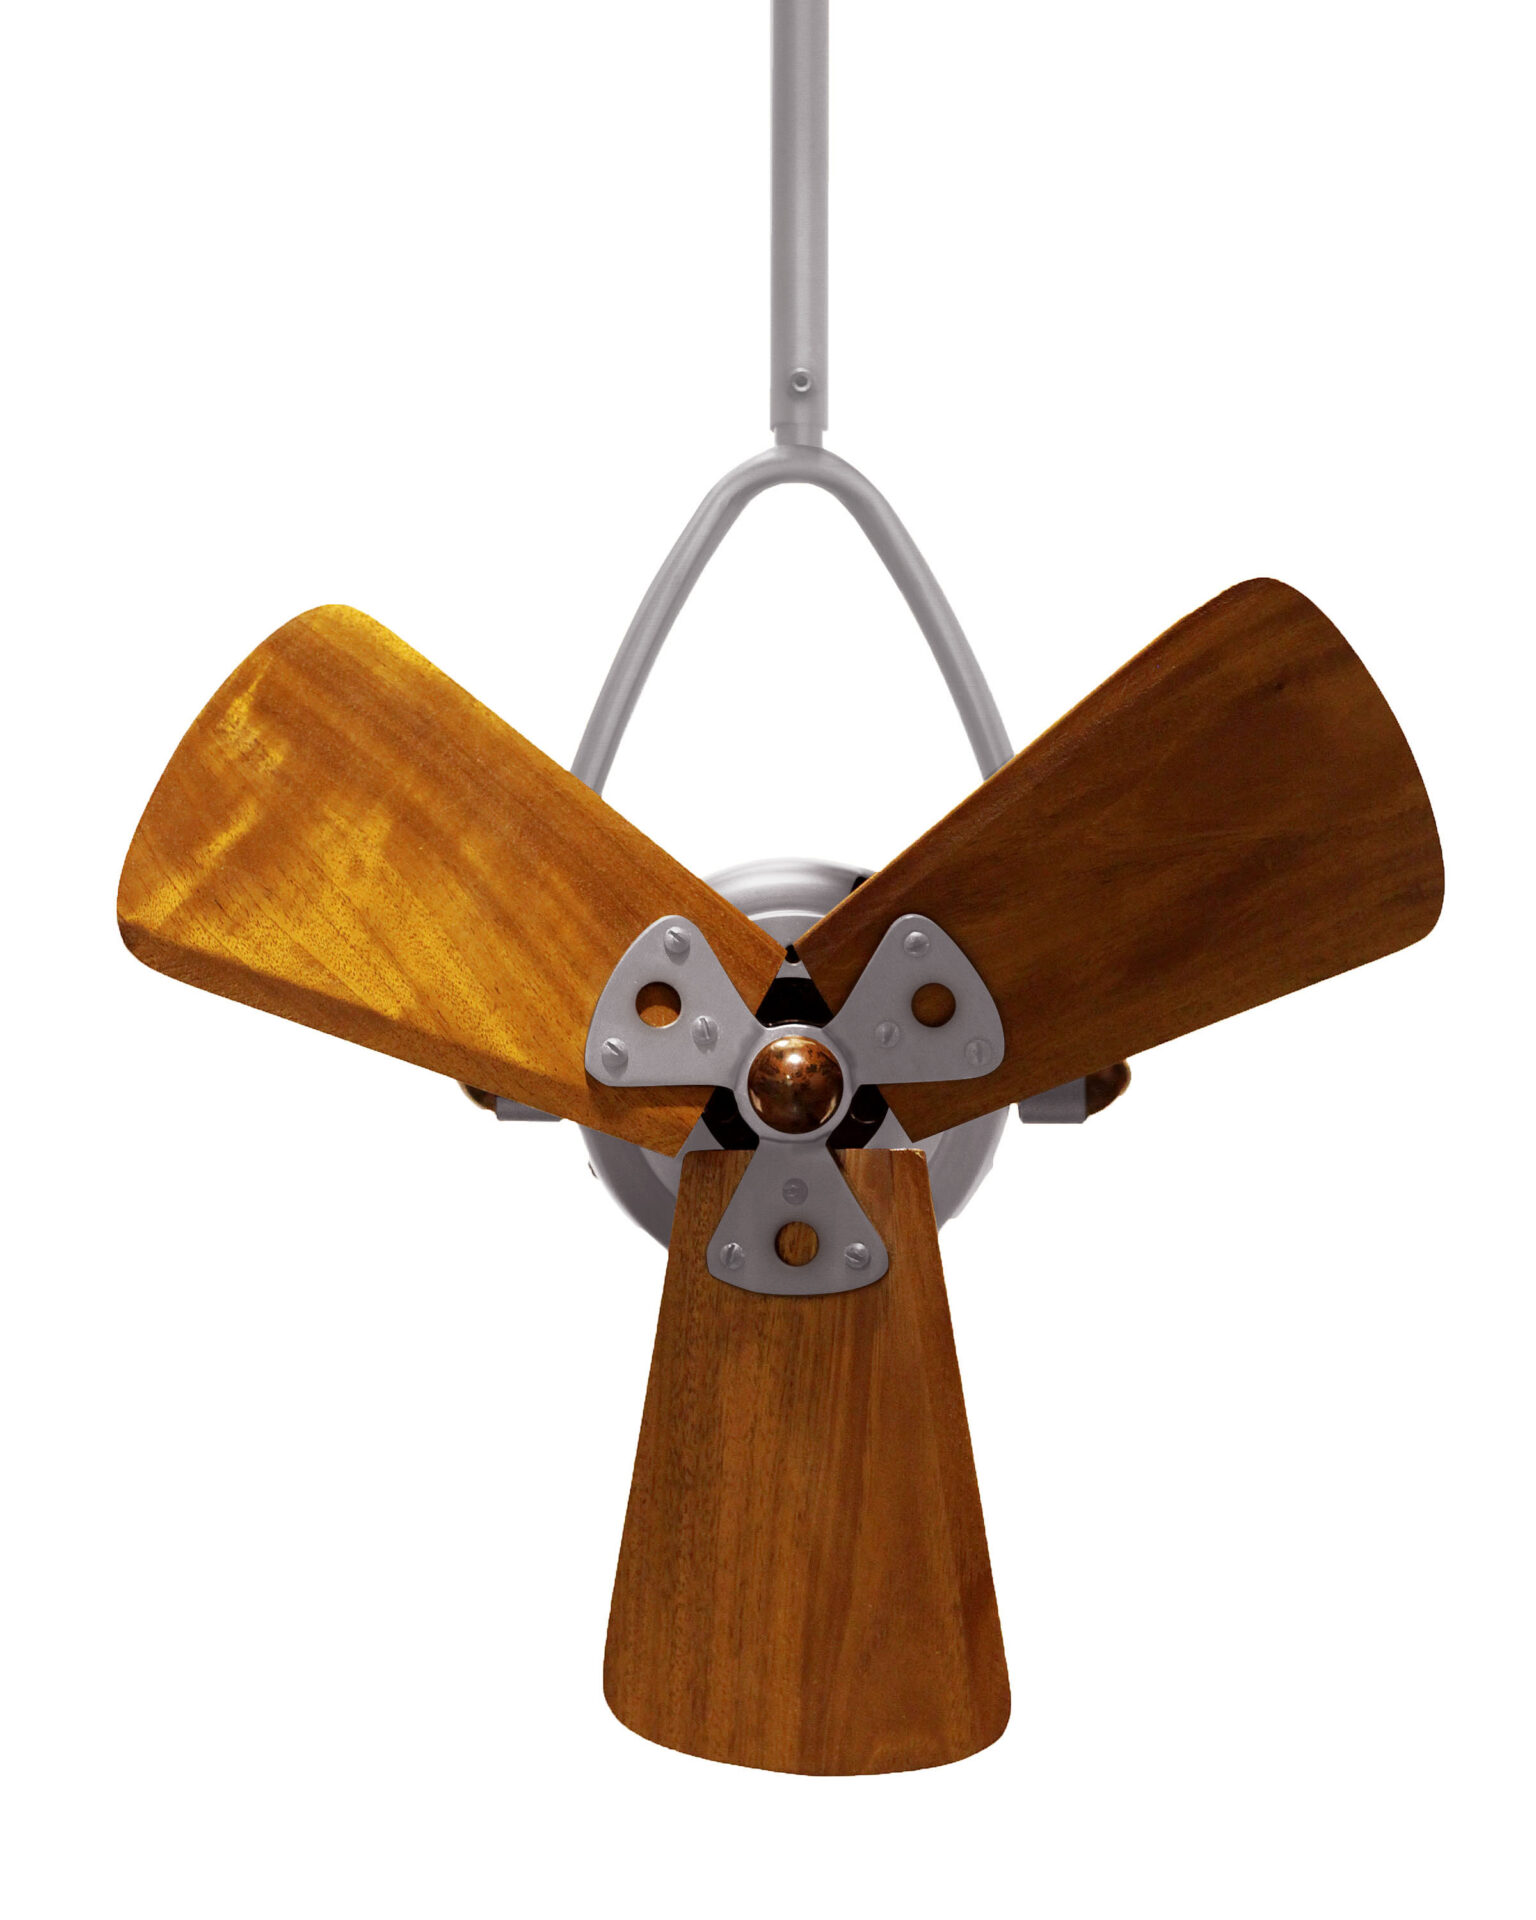 Jarold Direcional Ceiling Fan in Brushed Nickel with Mahogany Wood Blades